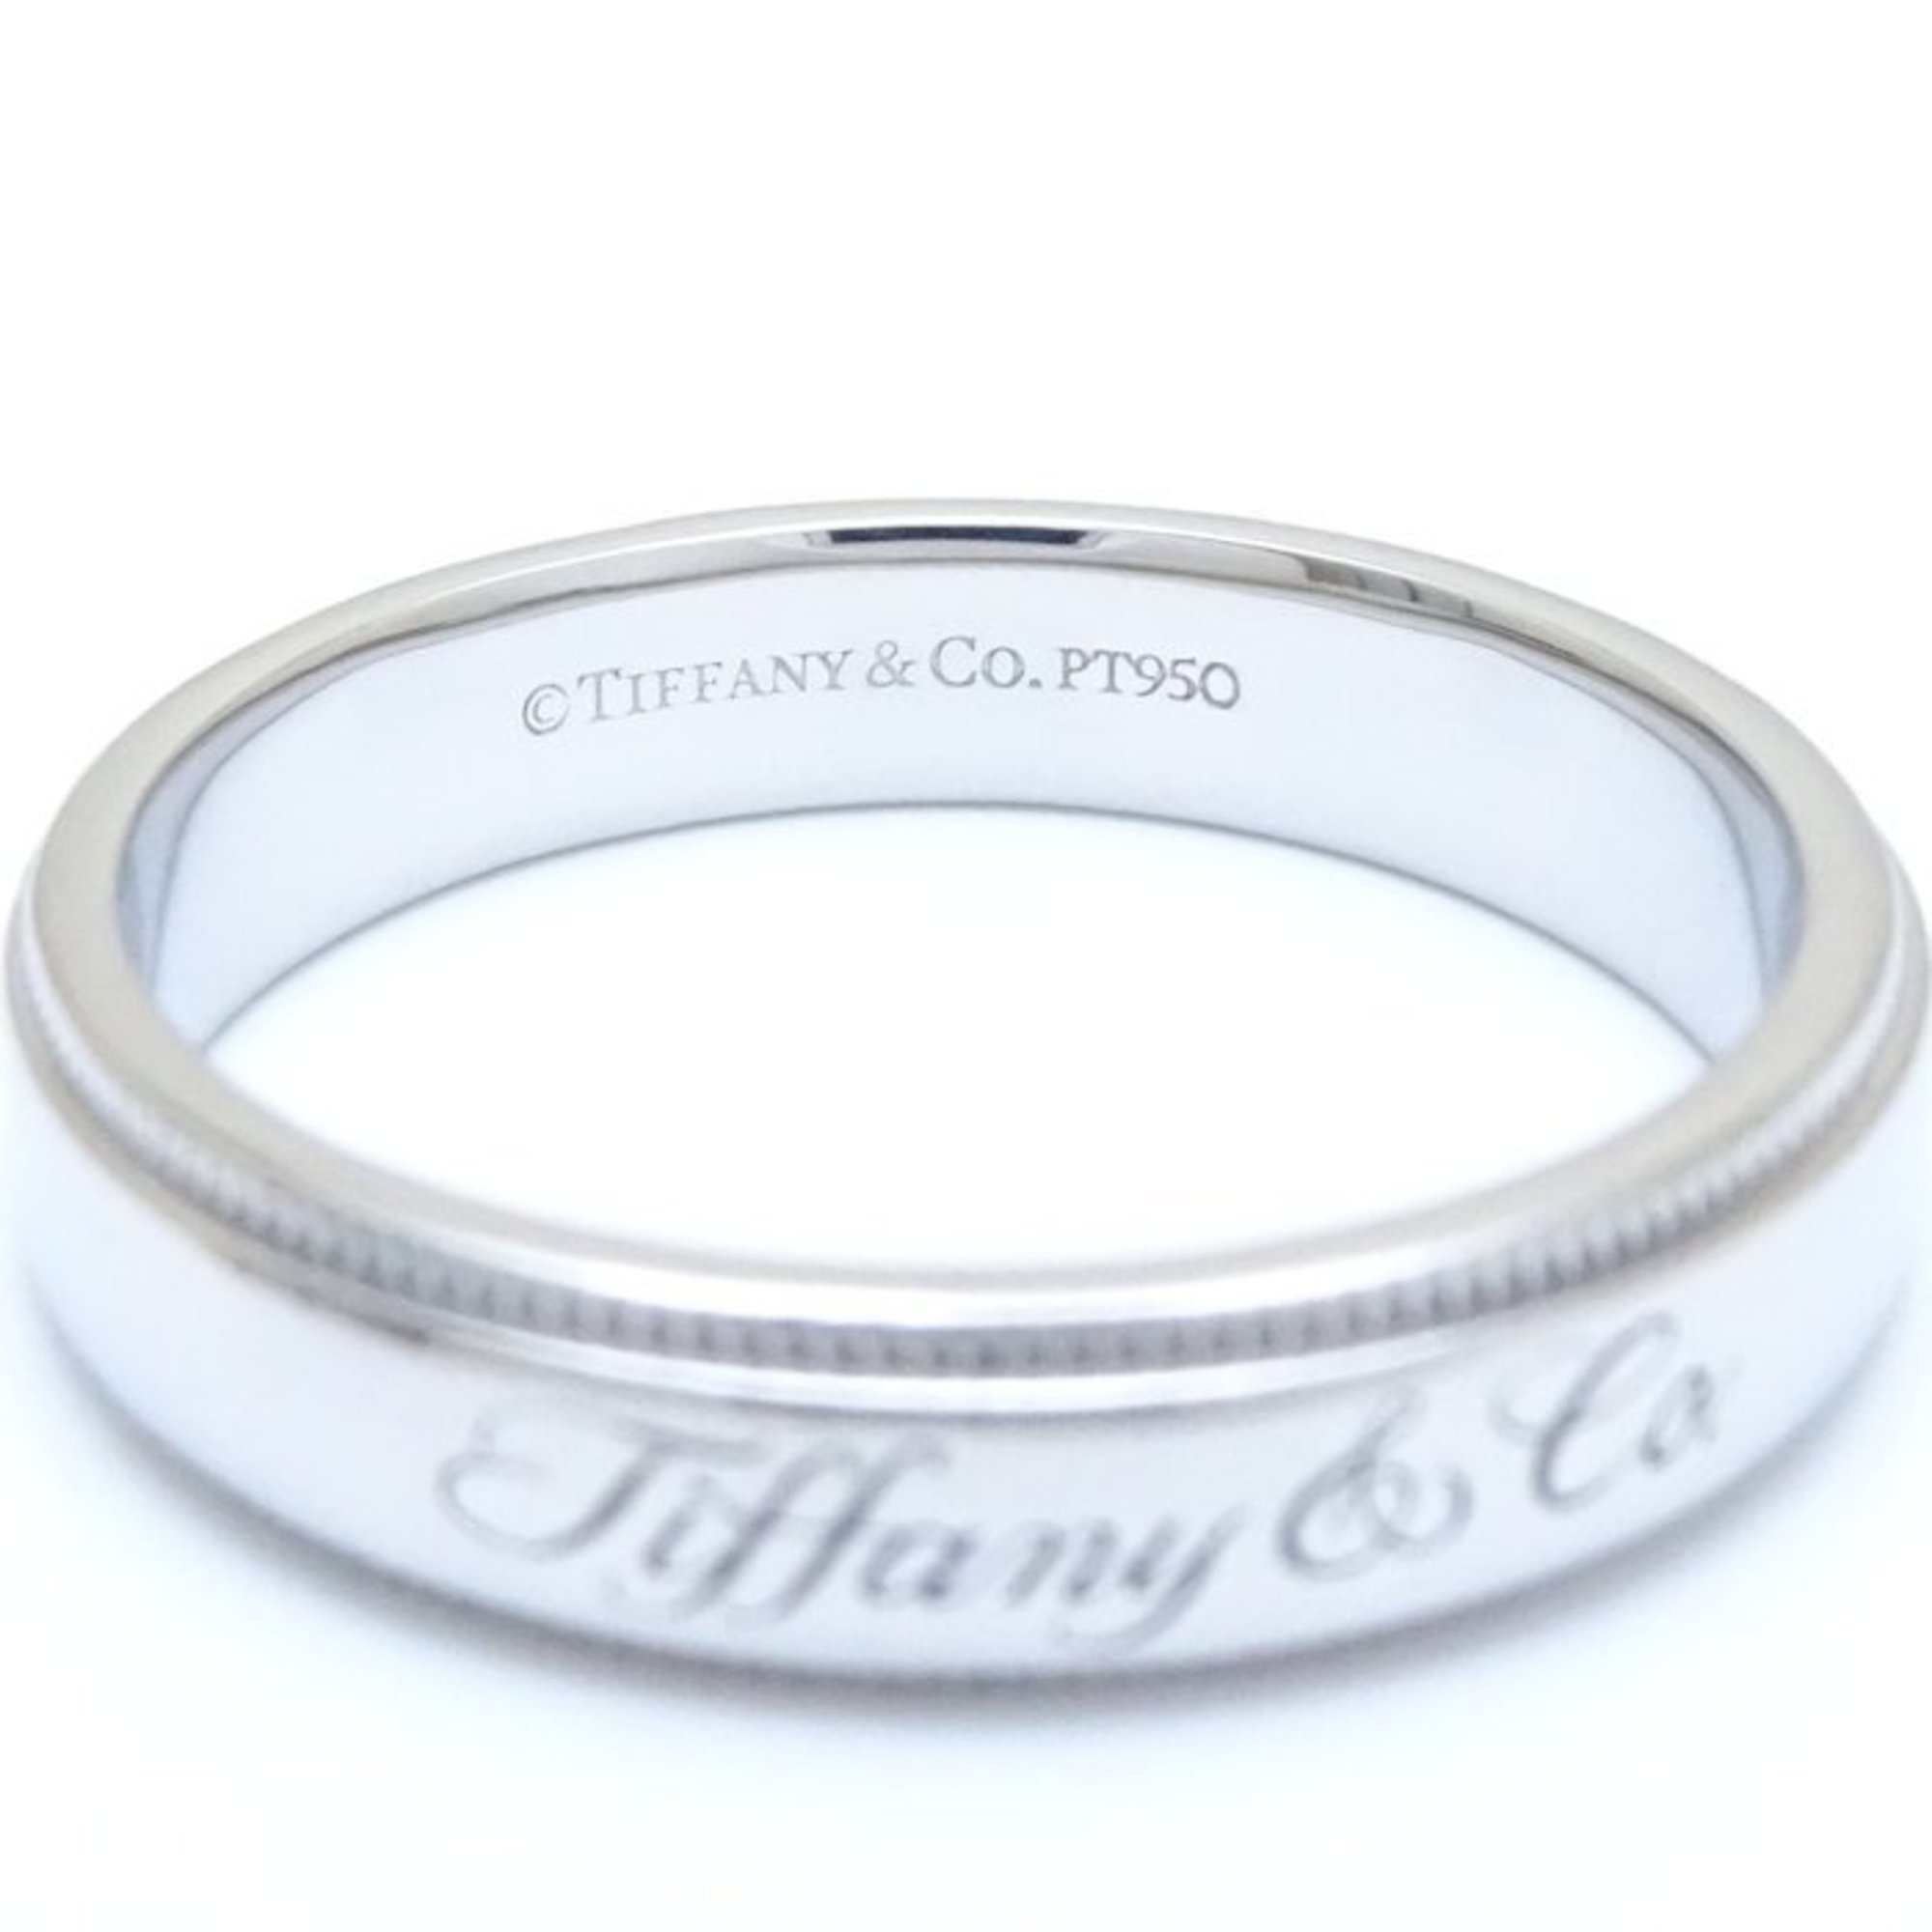 TIFFANY&Co. Tiffany Notes Band Milgrain Ring 4mm Pt950 Platinum 290612